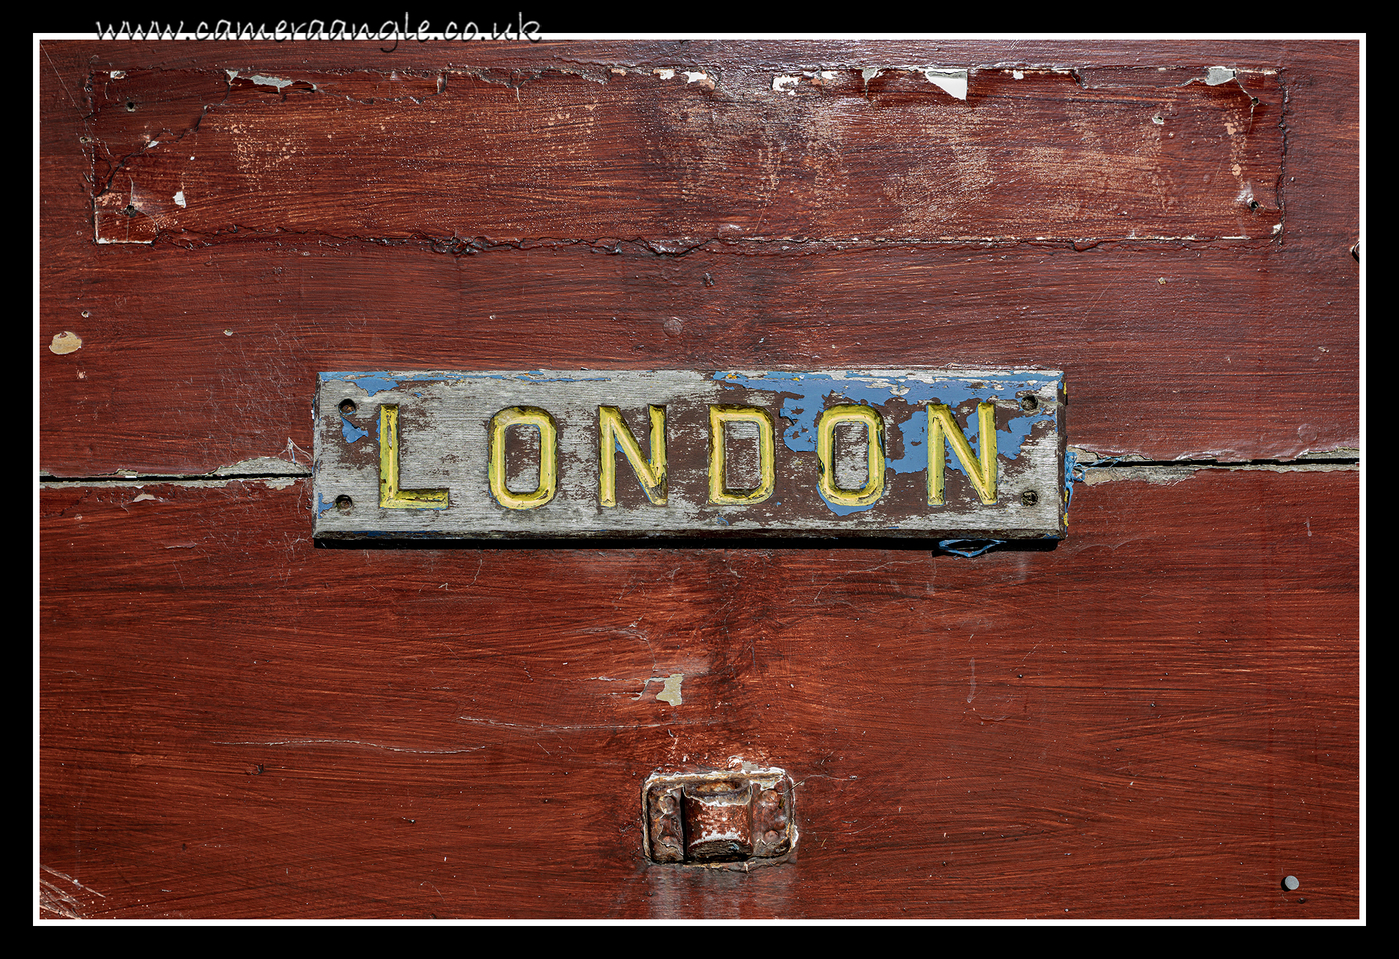 London
Back of a derelict boat
Keywords: London Mendips Tour